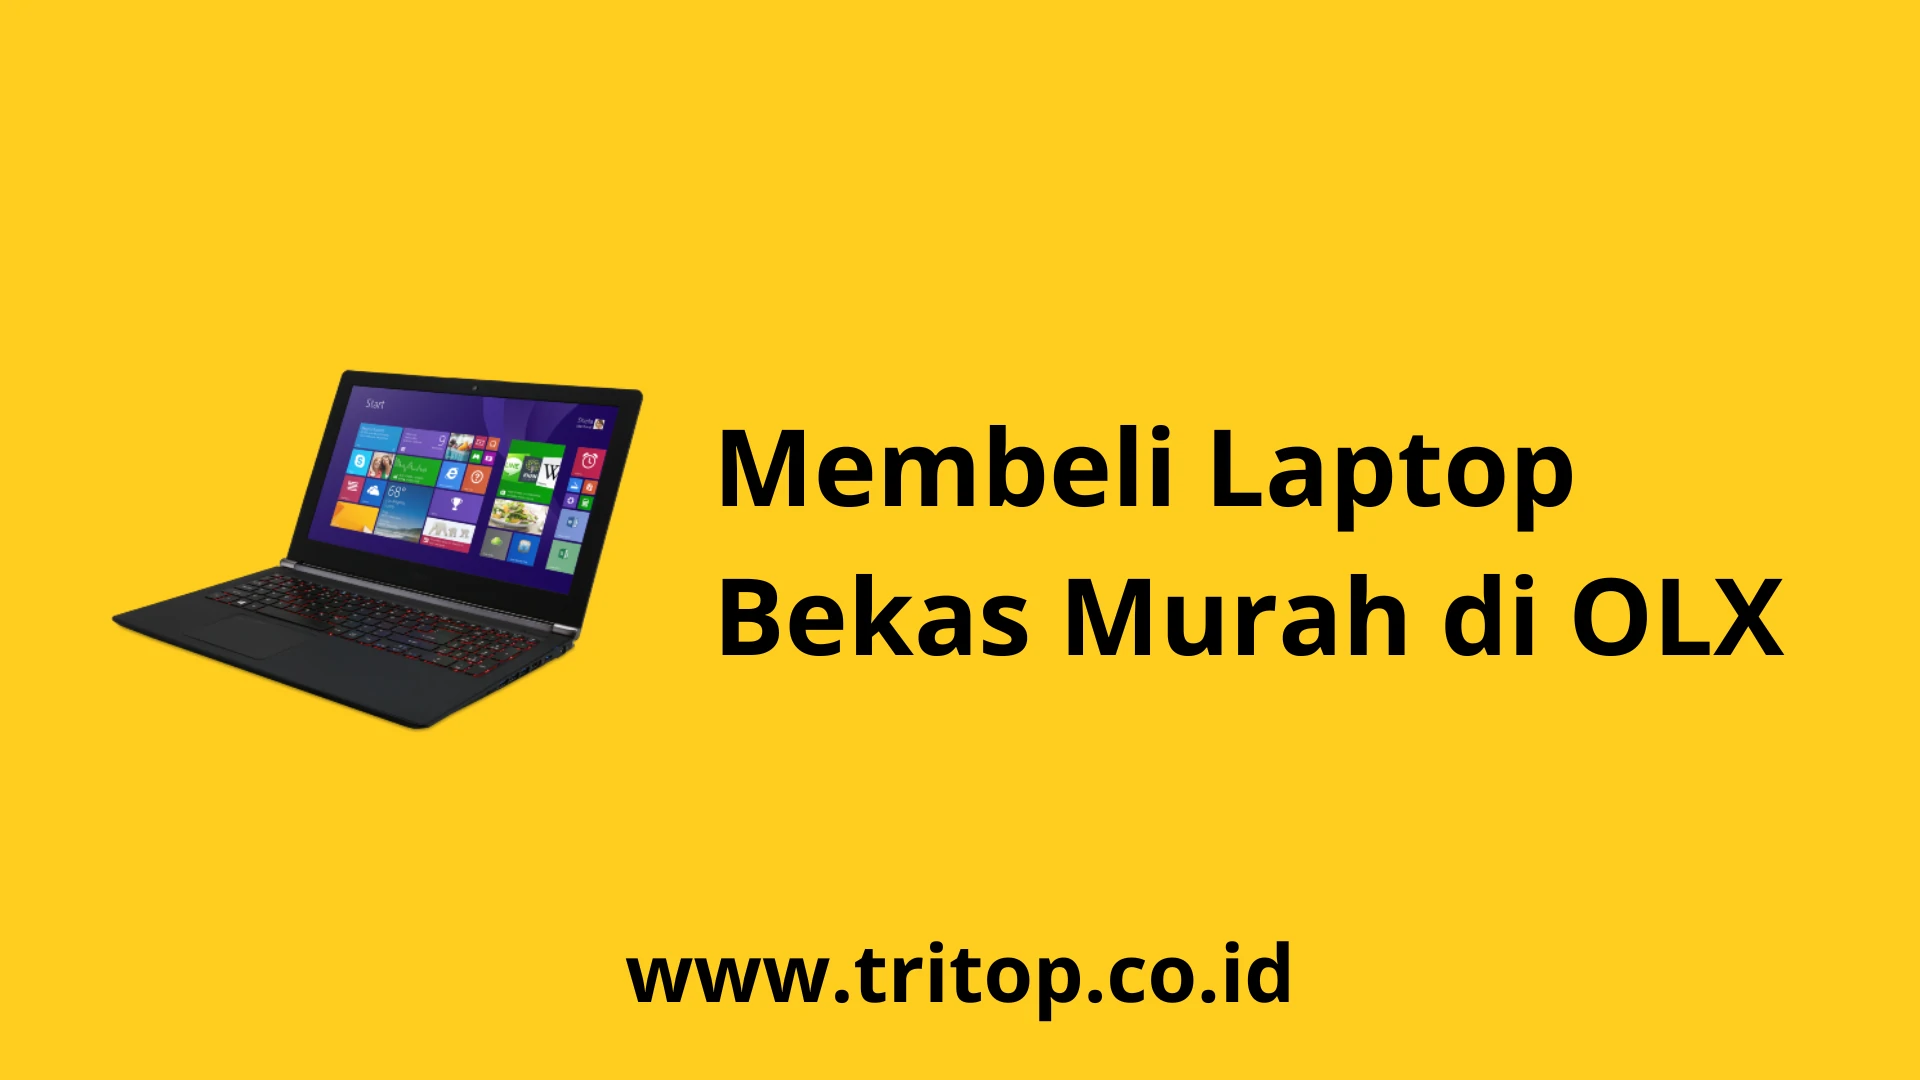 Laptop Bekas Murah OLX www.tritop.co.id